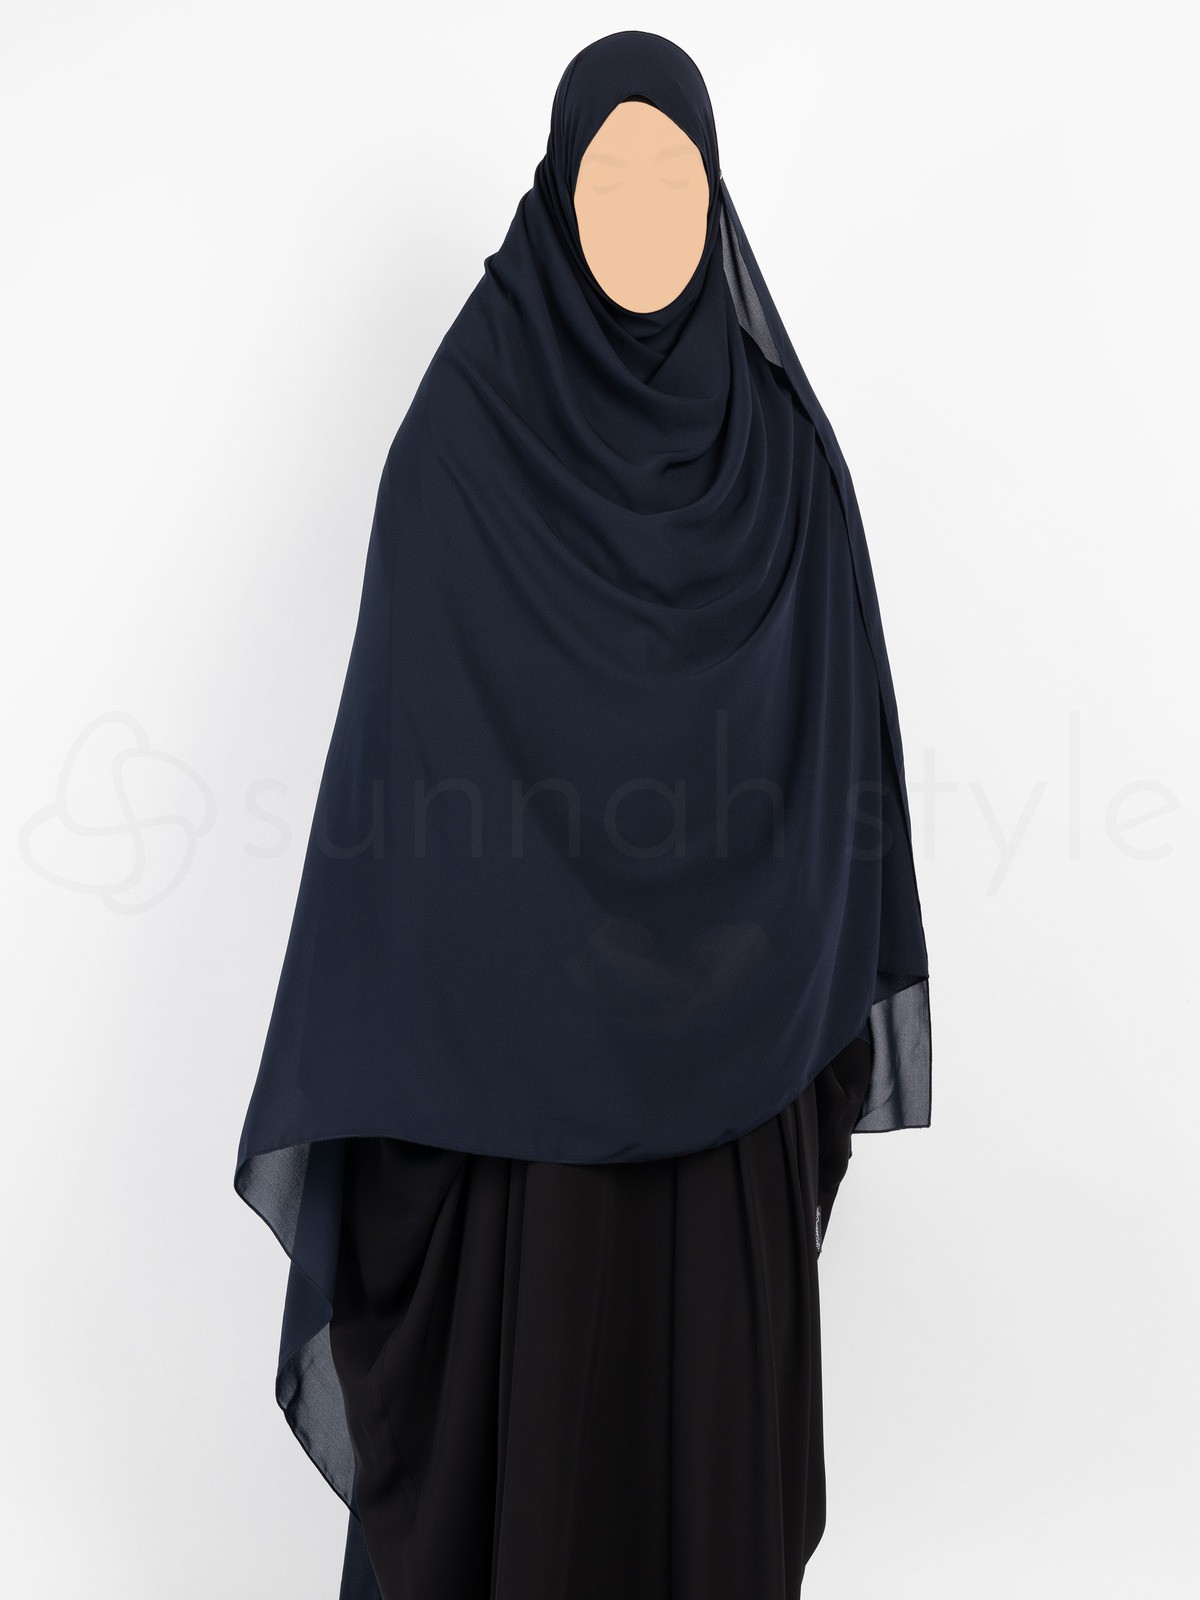 Sunnah Style - Essentials Shayla (Premium Chiffon) - XXL (Navy Blue)